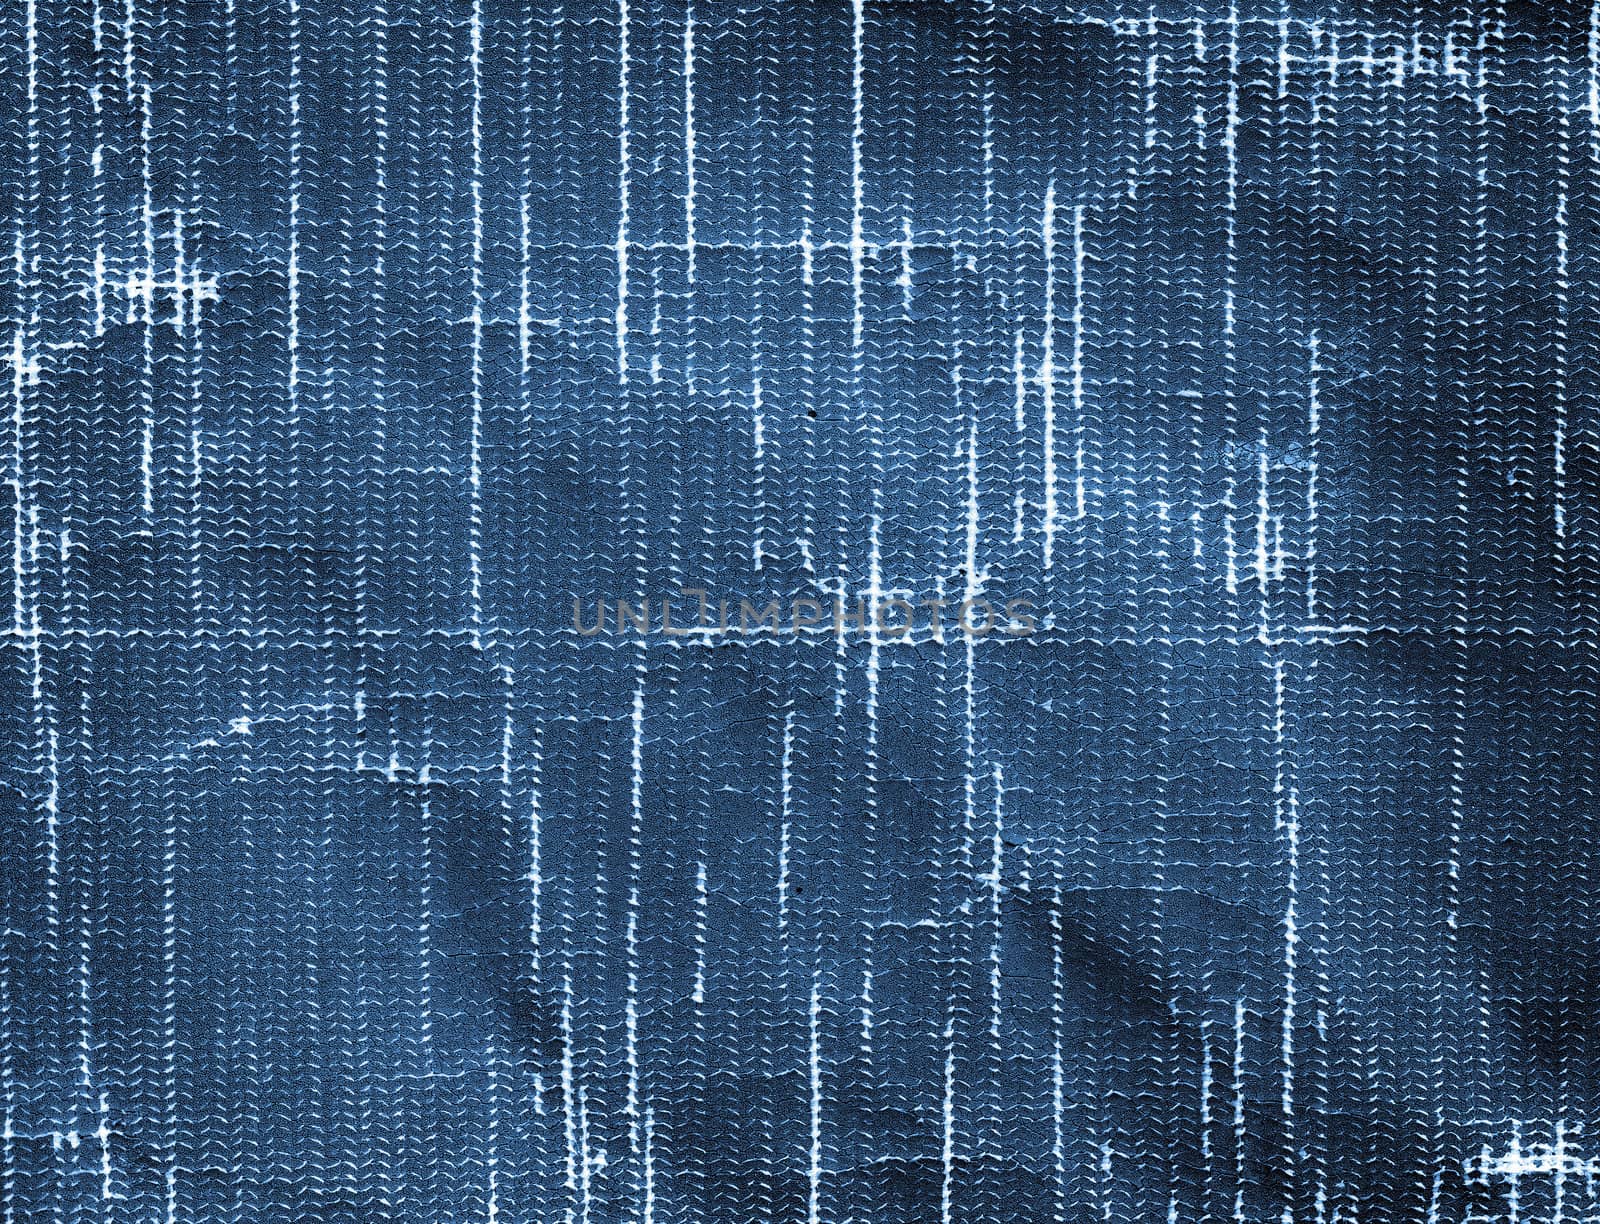 Worn tarpaulin background texture. Close up